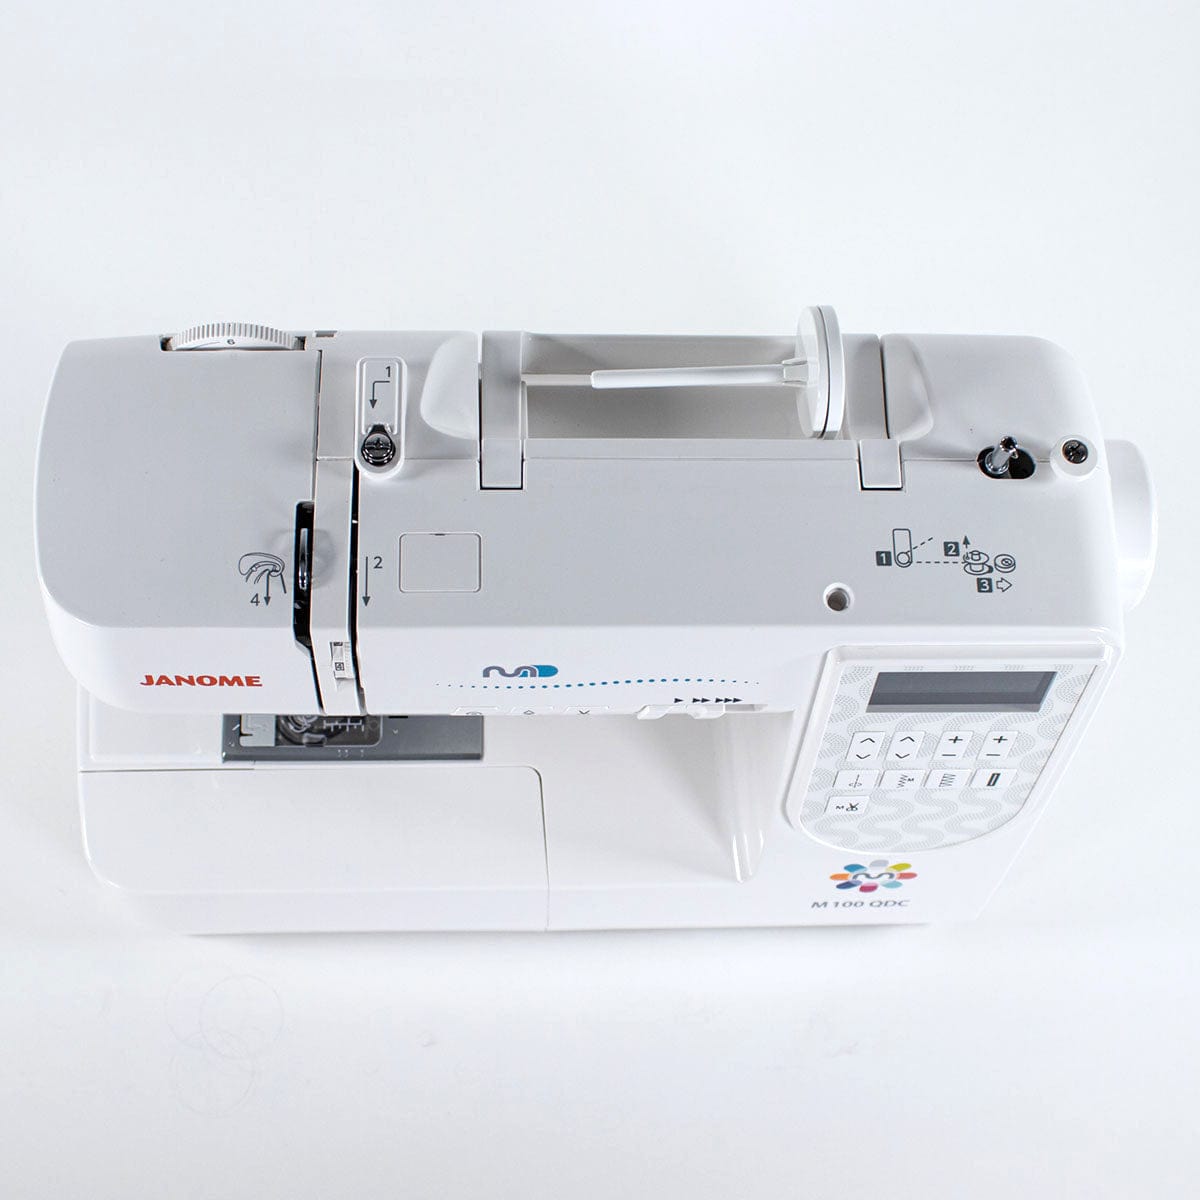 Janome M100QDC Sewing Machine